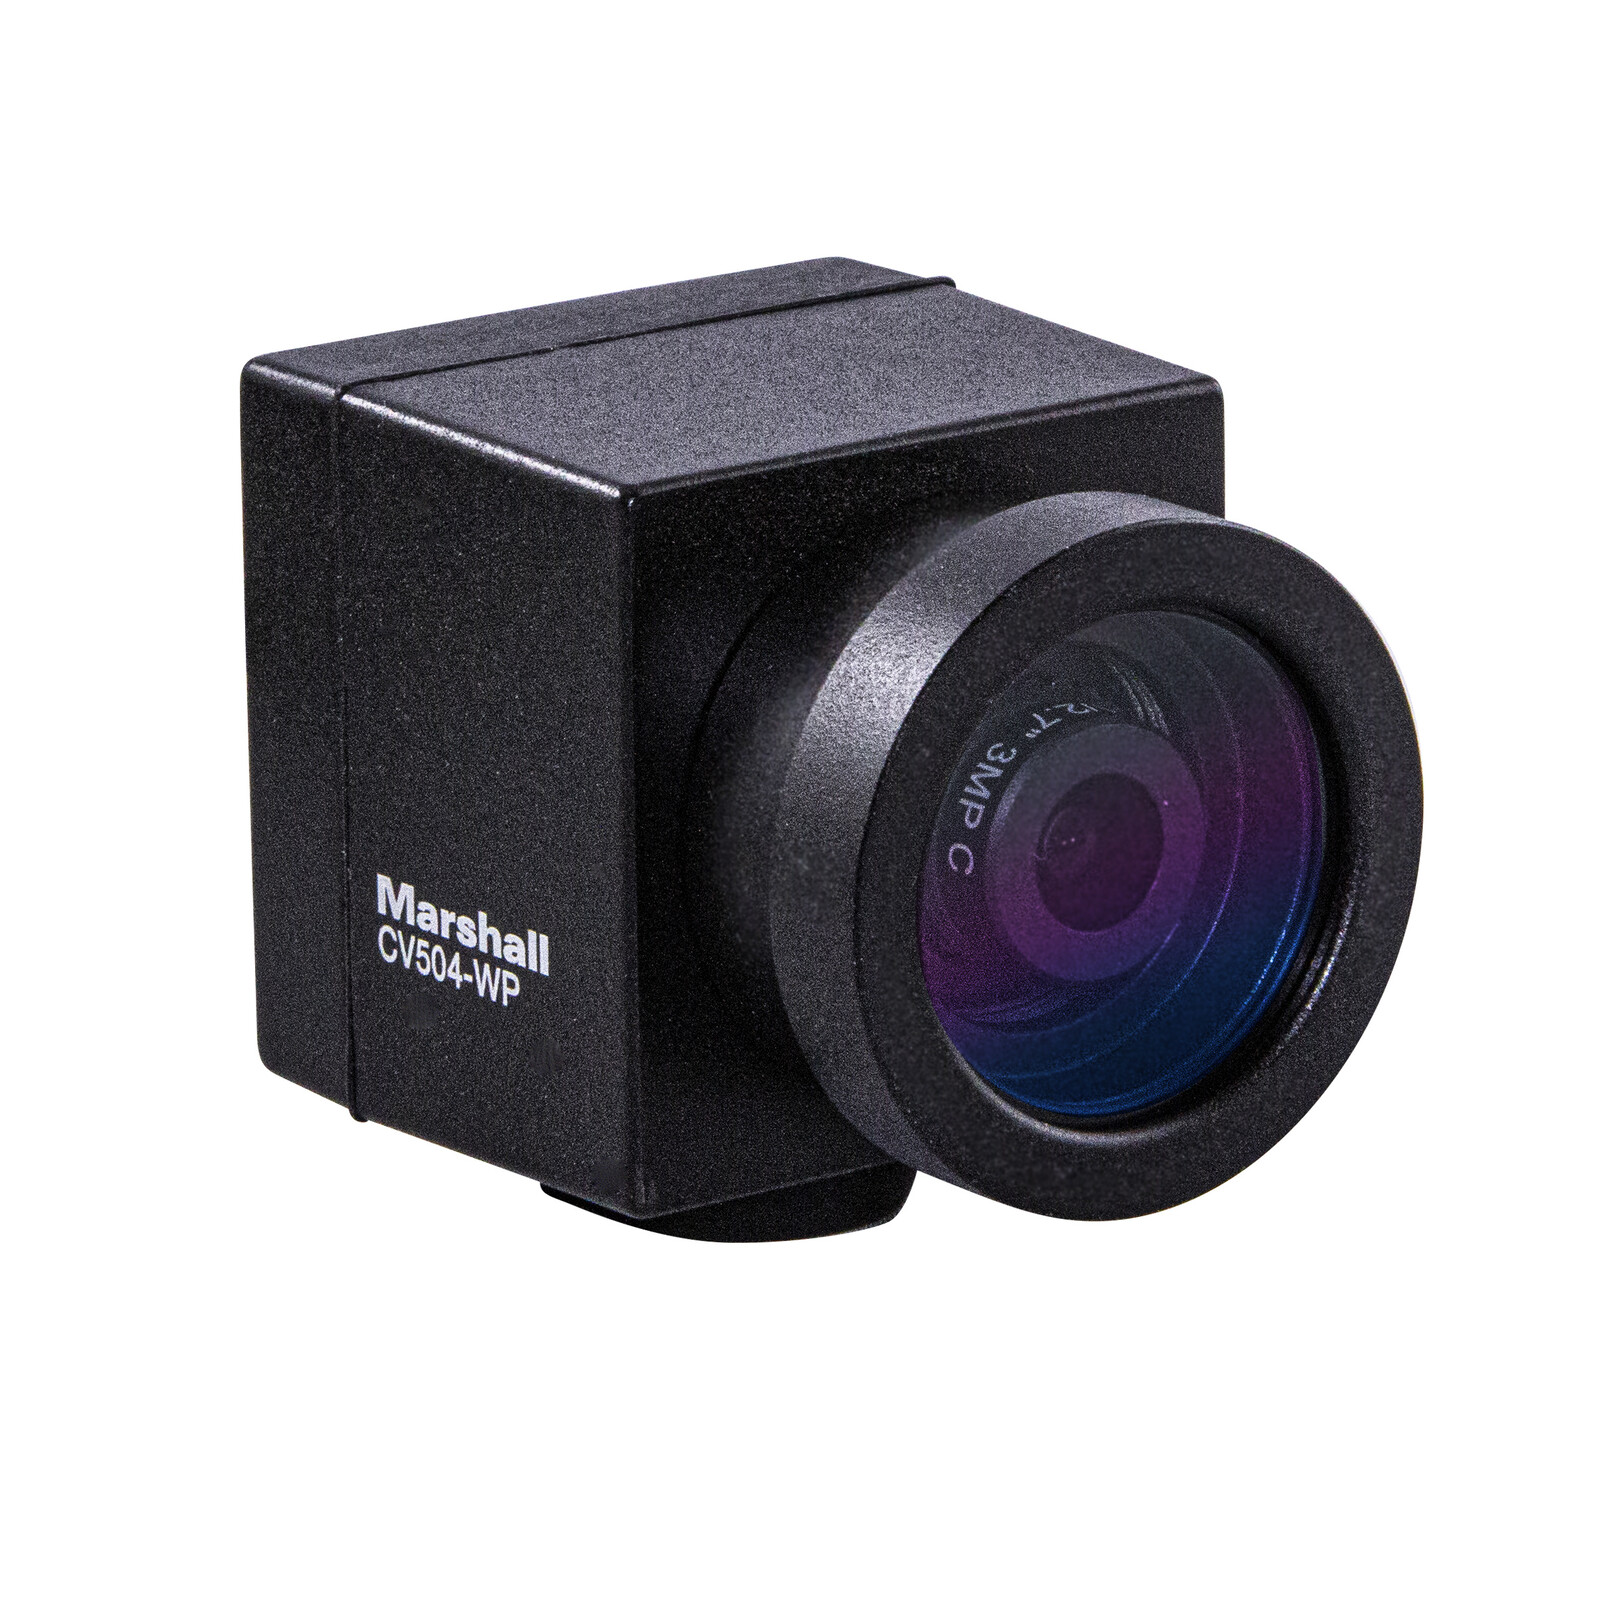 Marshall IP67 Weatherproof Mini Broadcast Camera with 4.0mm Interchangeable Lens – 3G-SDI Output (New Sensor)